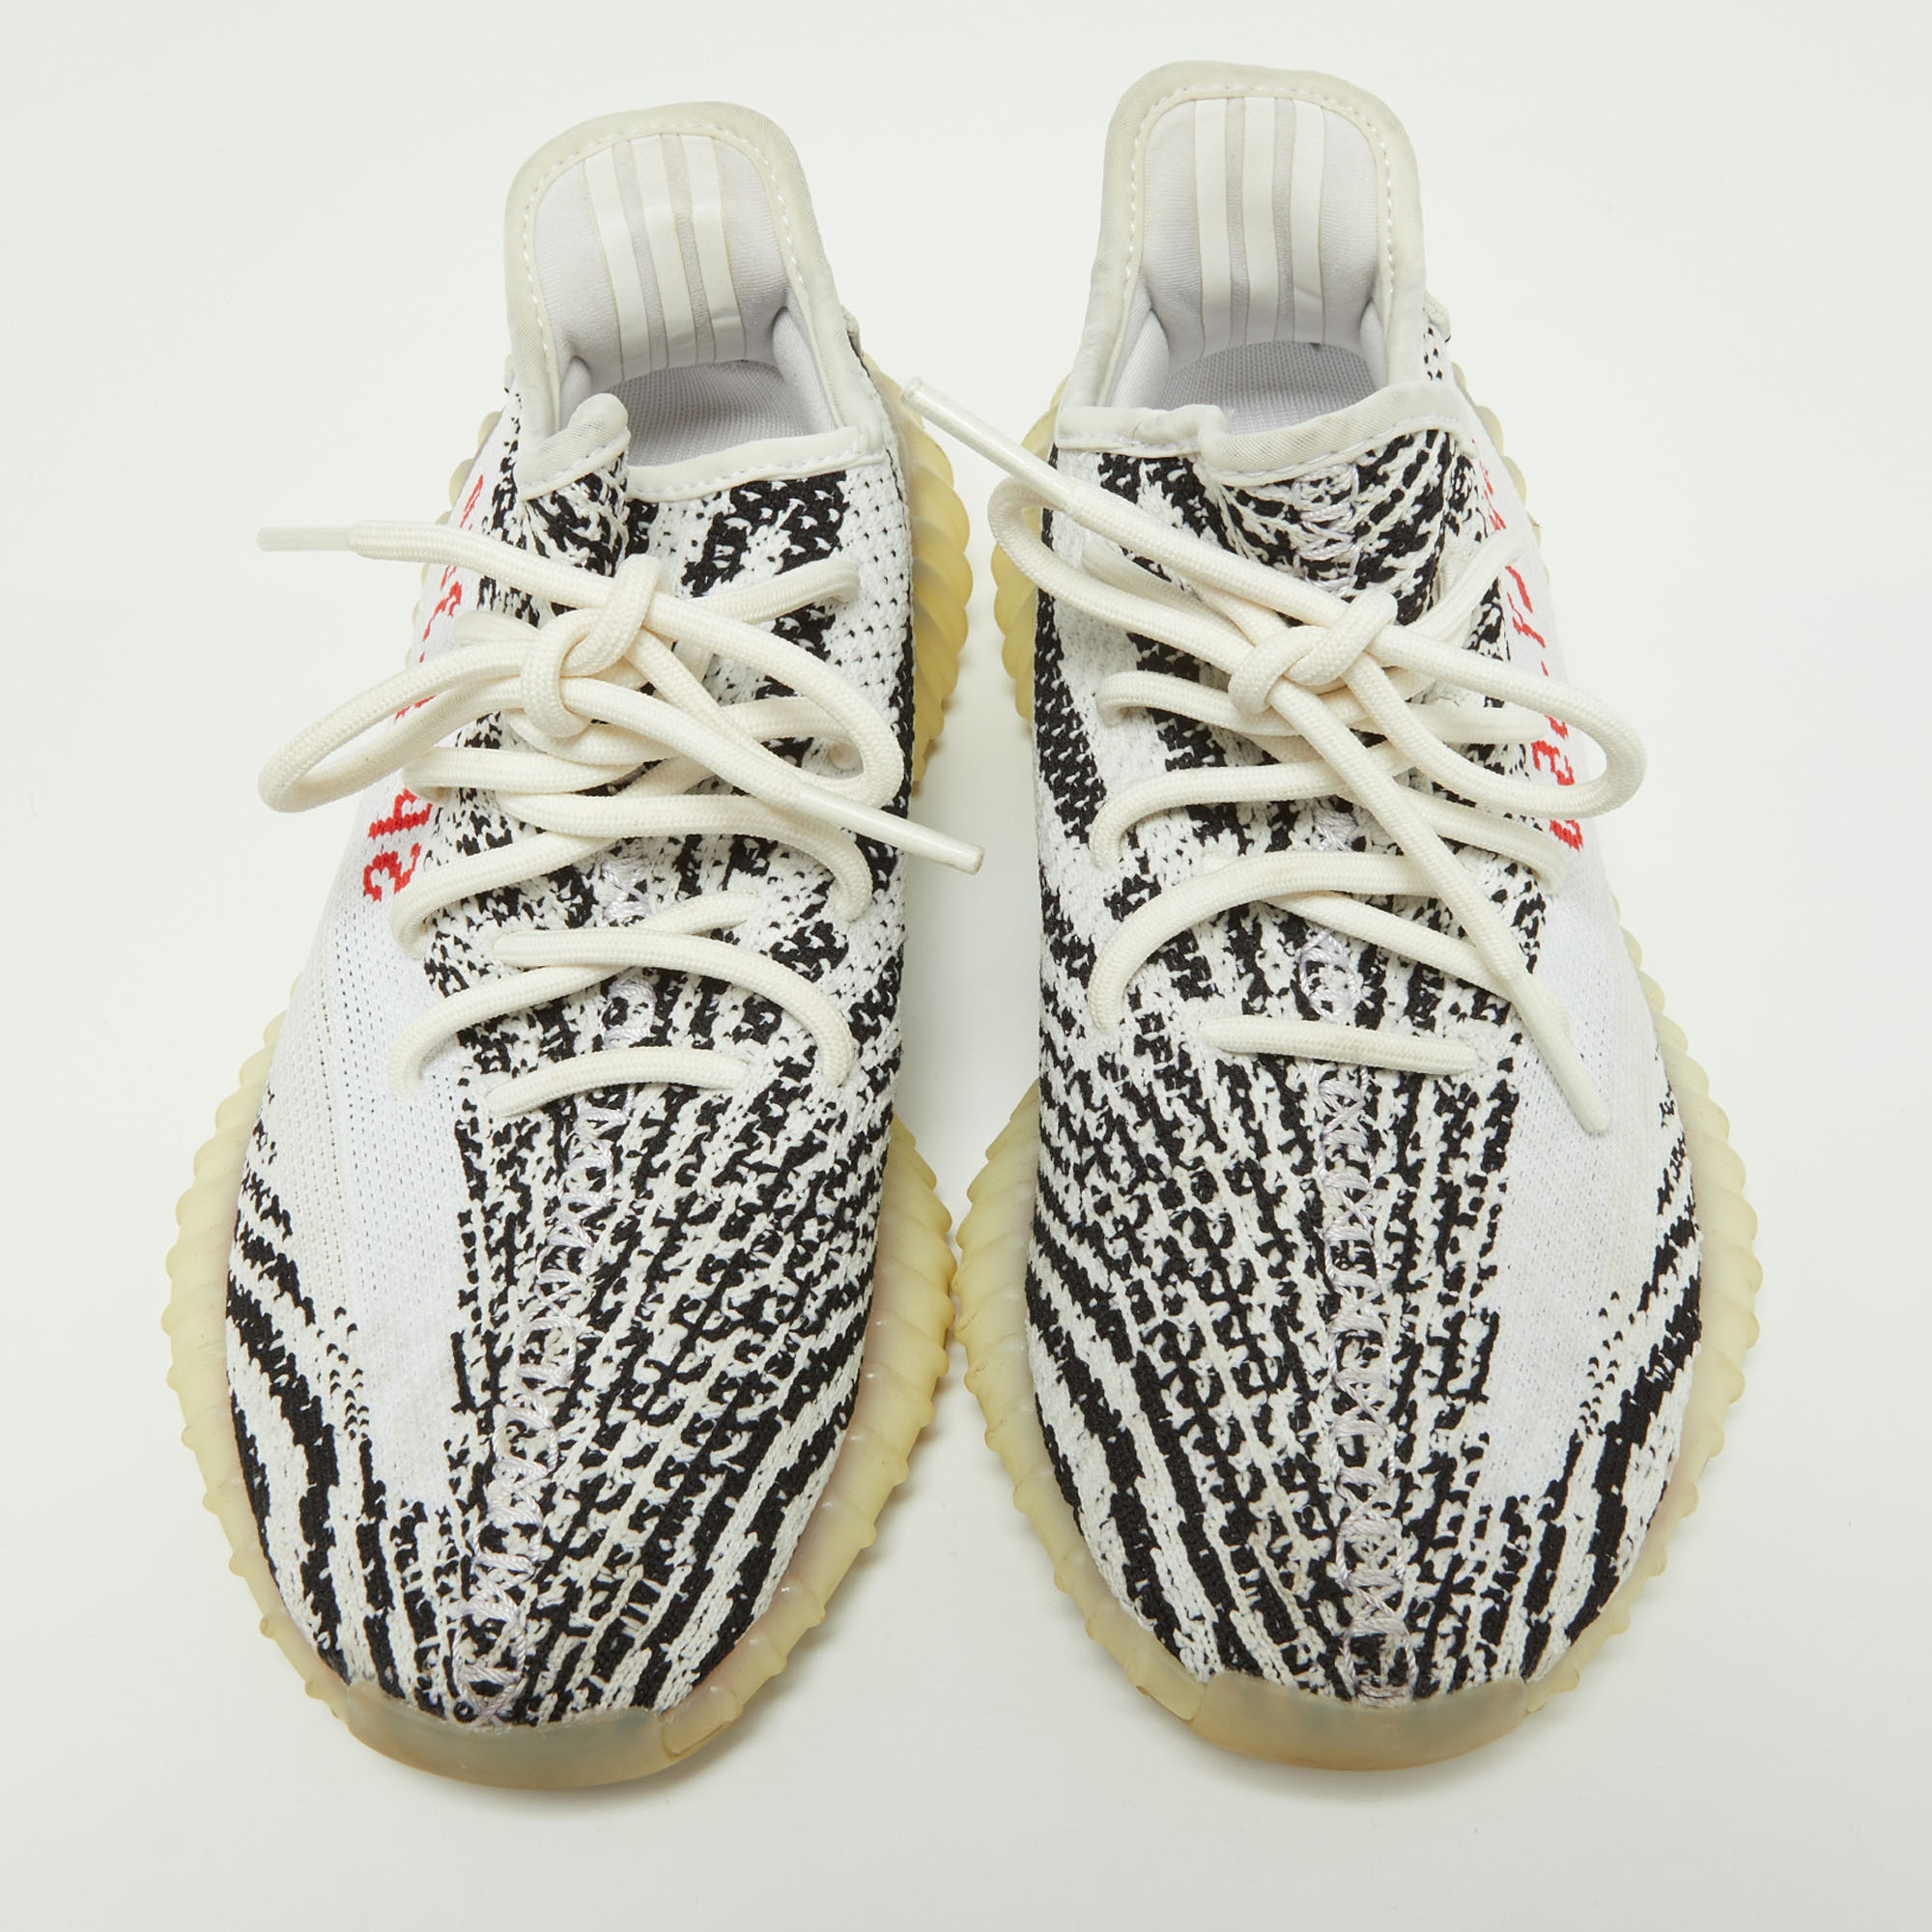 Yeezy X Adidas White/Black Knit Fabric Boost 350 V2 Zebra Sneakers Size 39 1/3